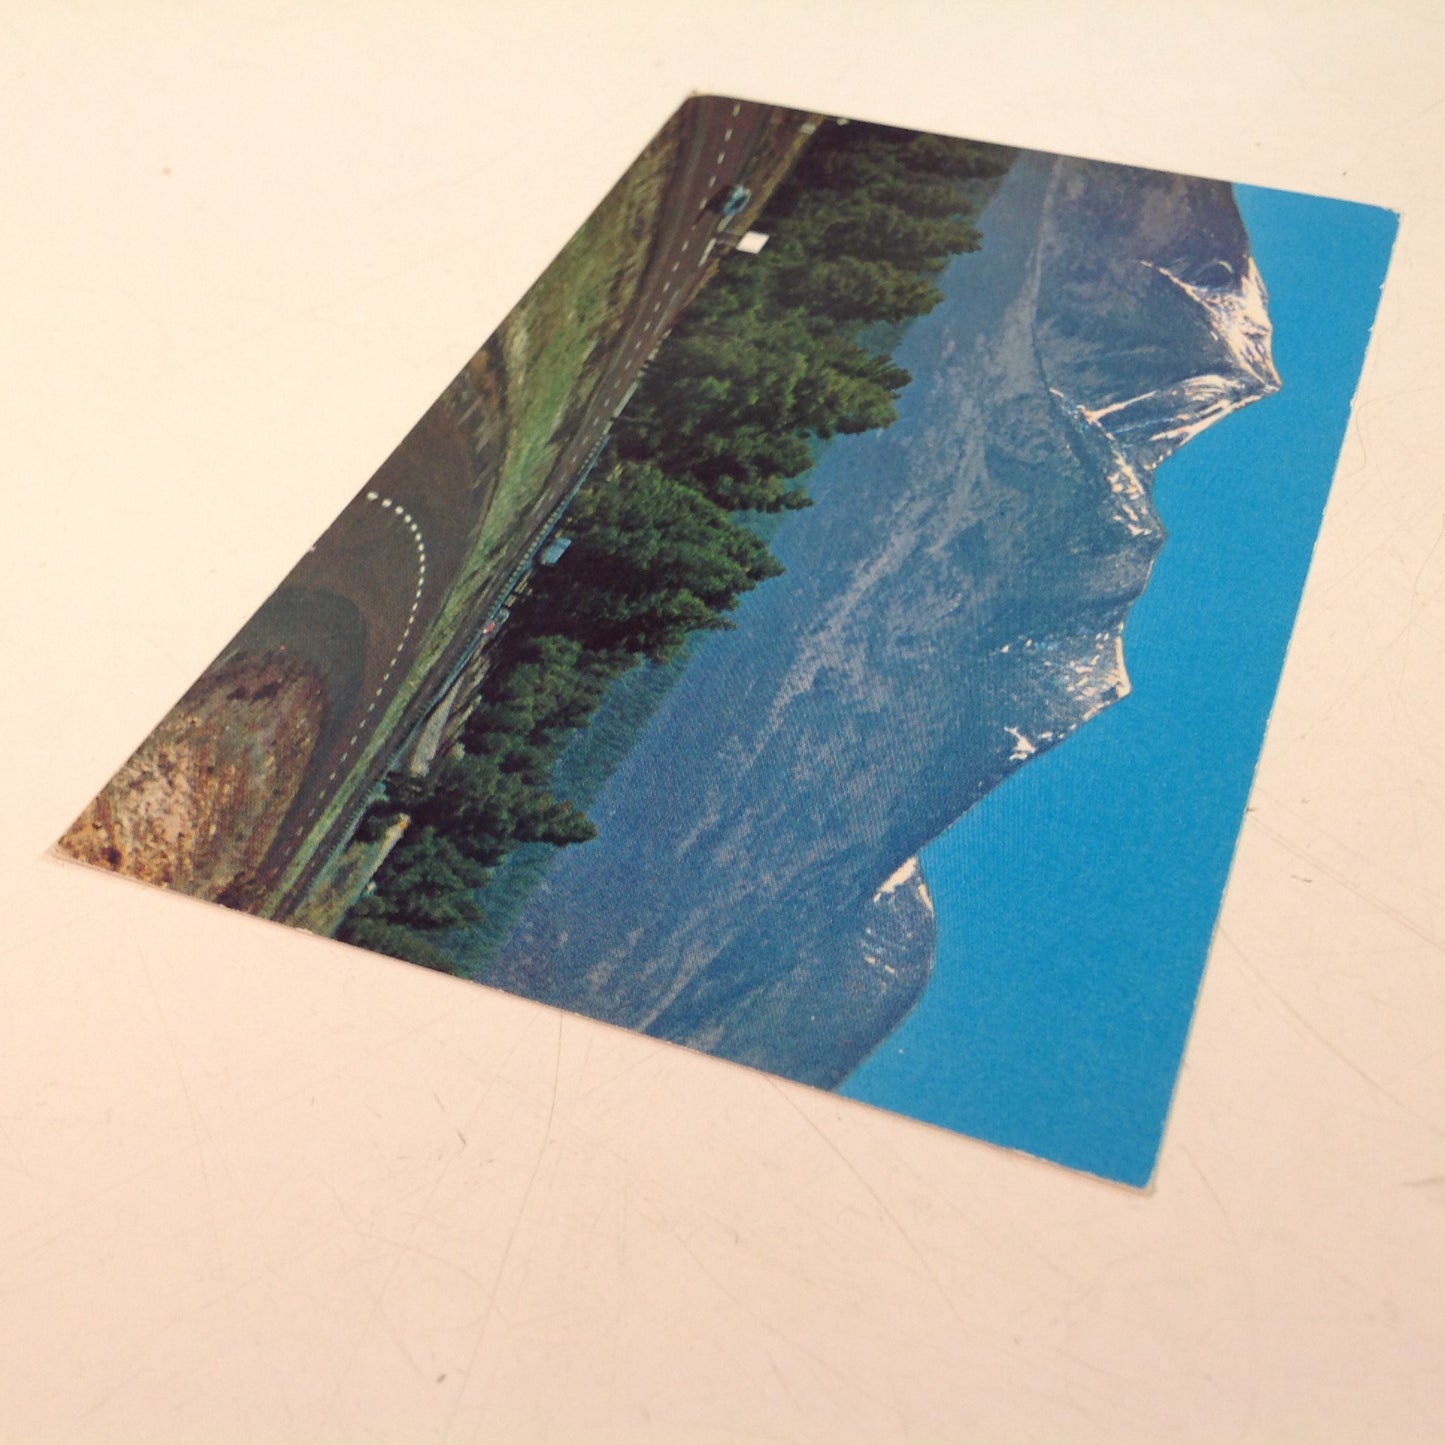 Vintage Color Postcard Rollie F Houck Photo San Francisco Peaks Along Interstate #17 Leading Into Flagstaff from Oak Creek Canyon and Phoenix Arizona